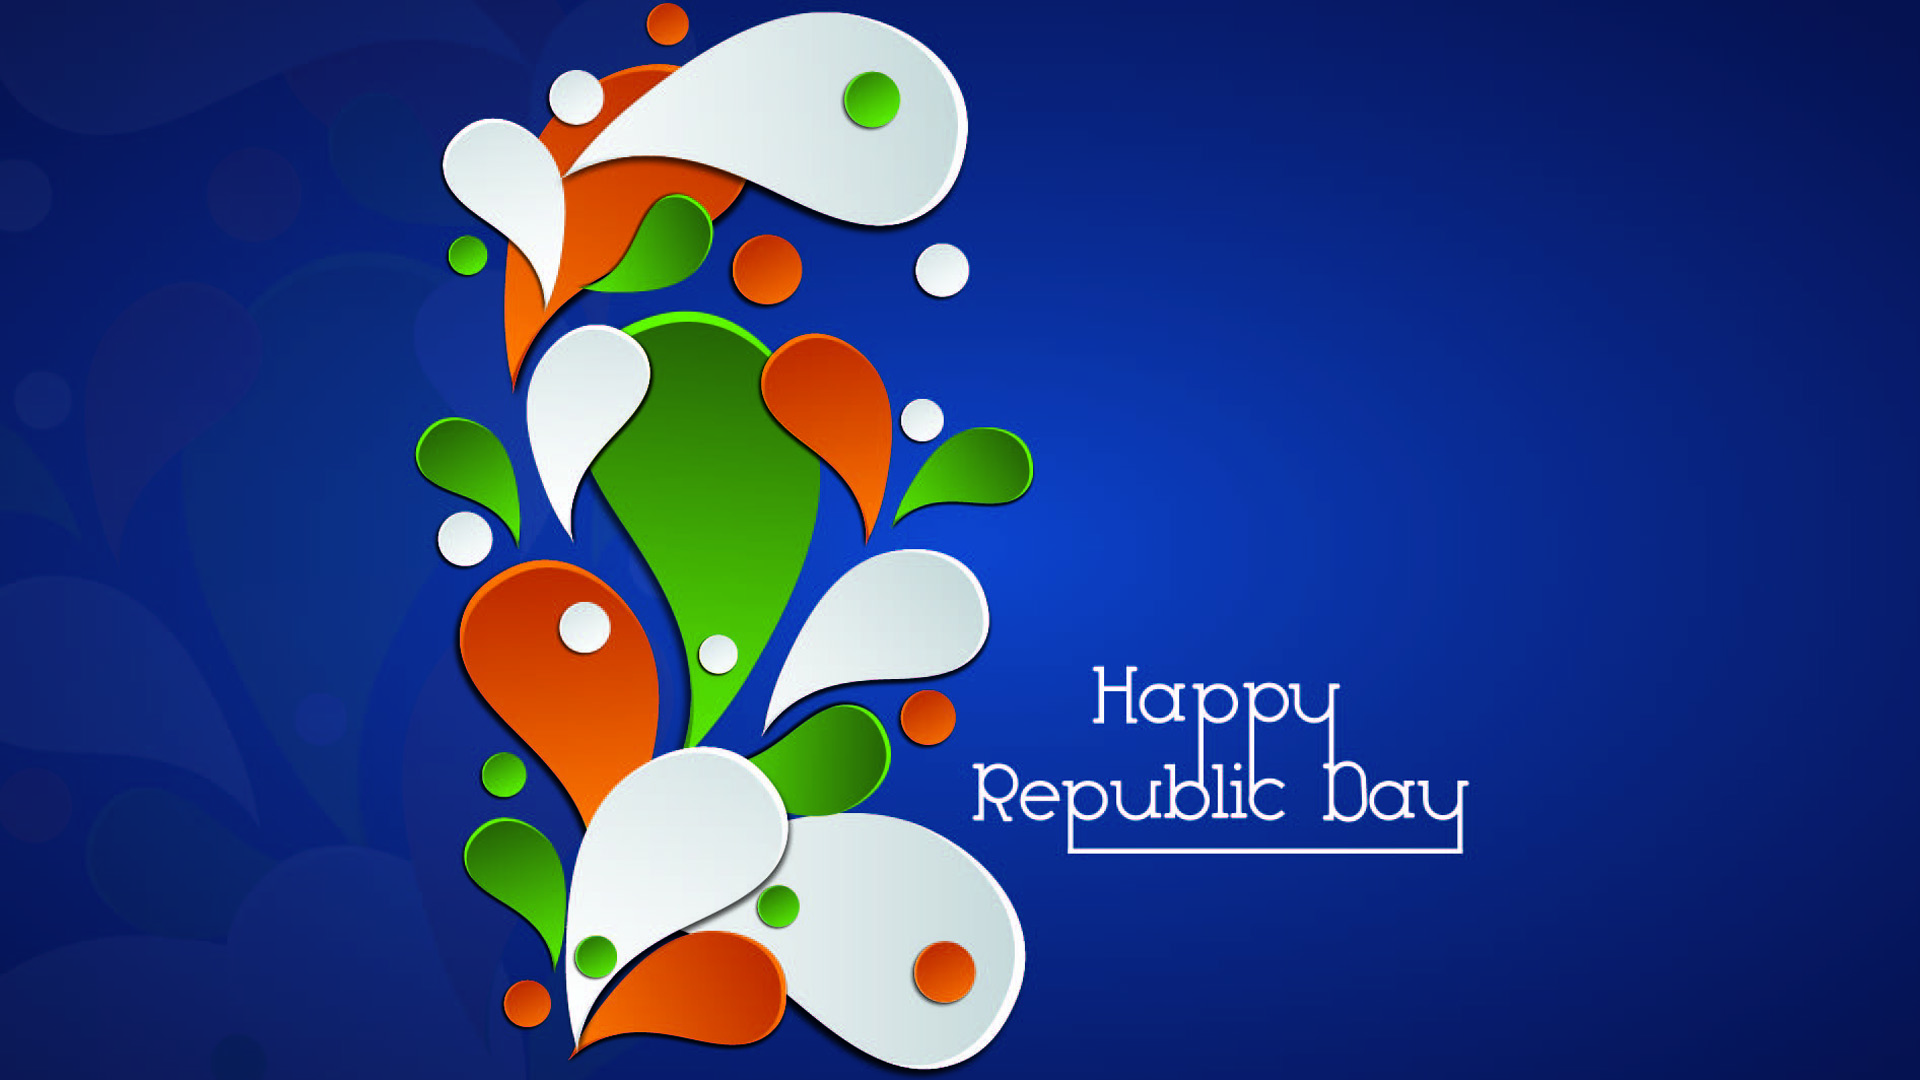 Happy Republic Day 2018 Greeting Card